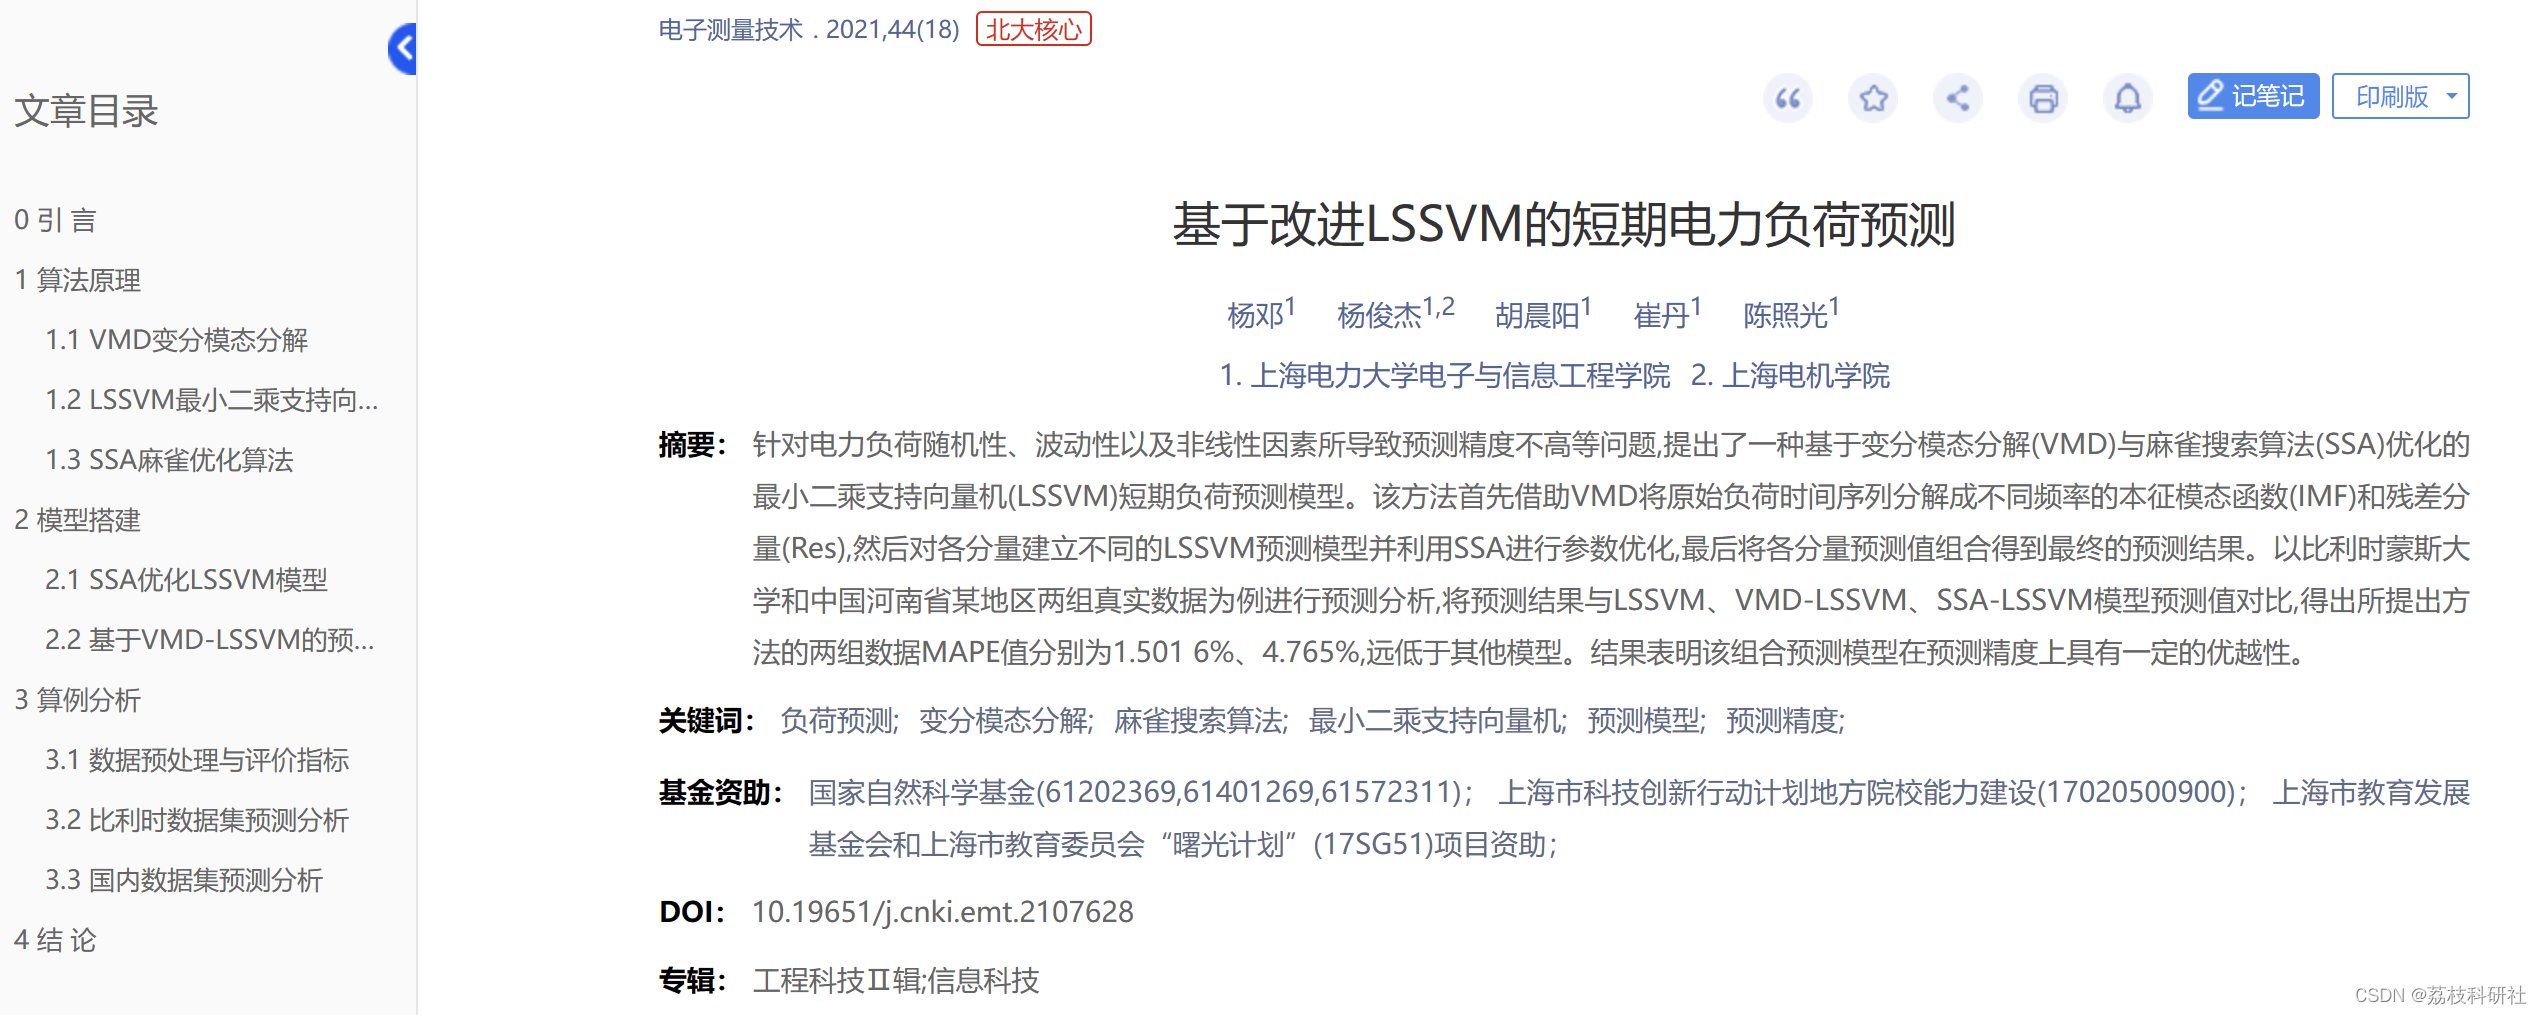 【VMD-SSA-LSSVM】基于变分模态分解与麻雀优化Lssvm的负荷预测【多变量】（Matlab代码实现）